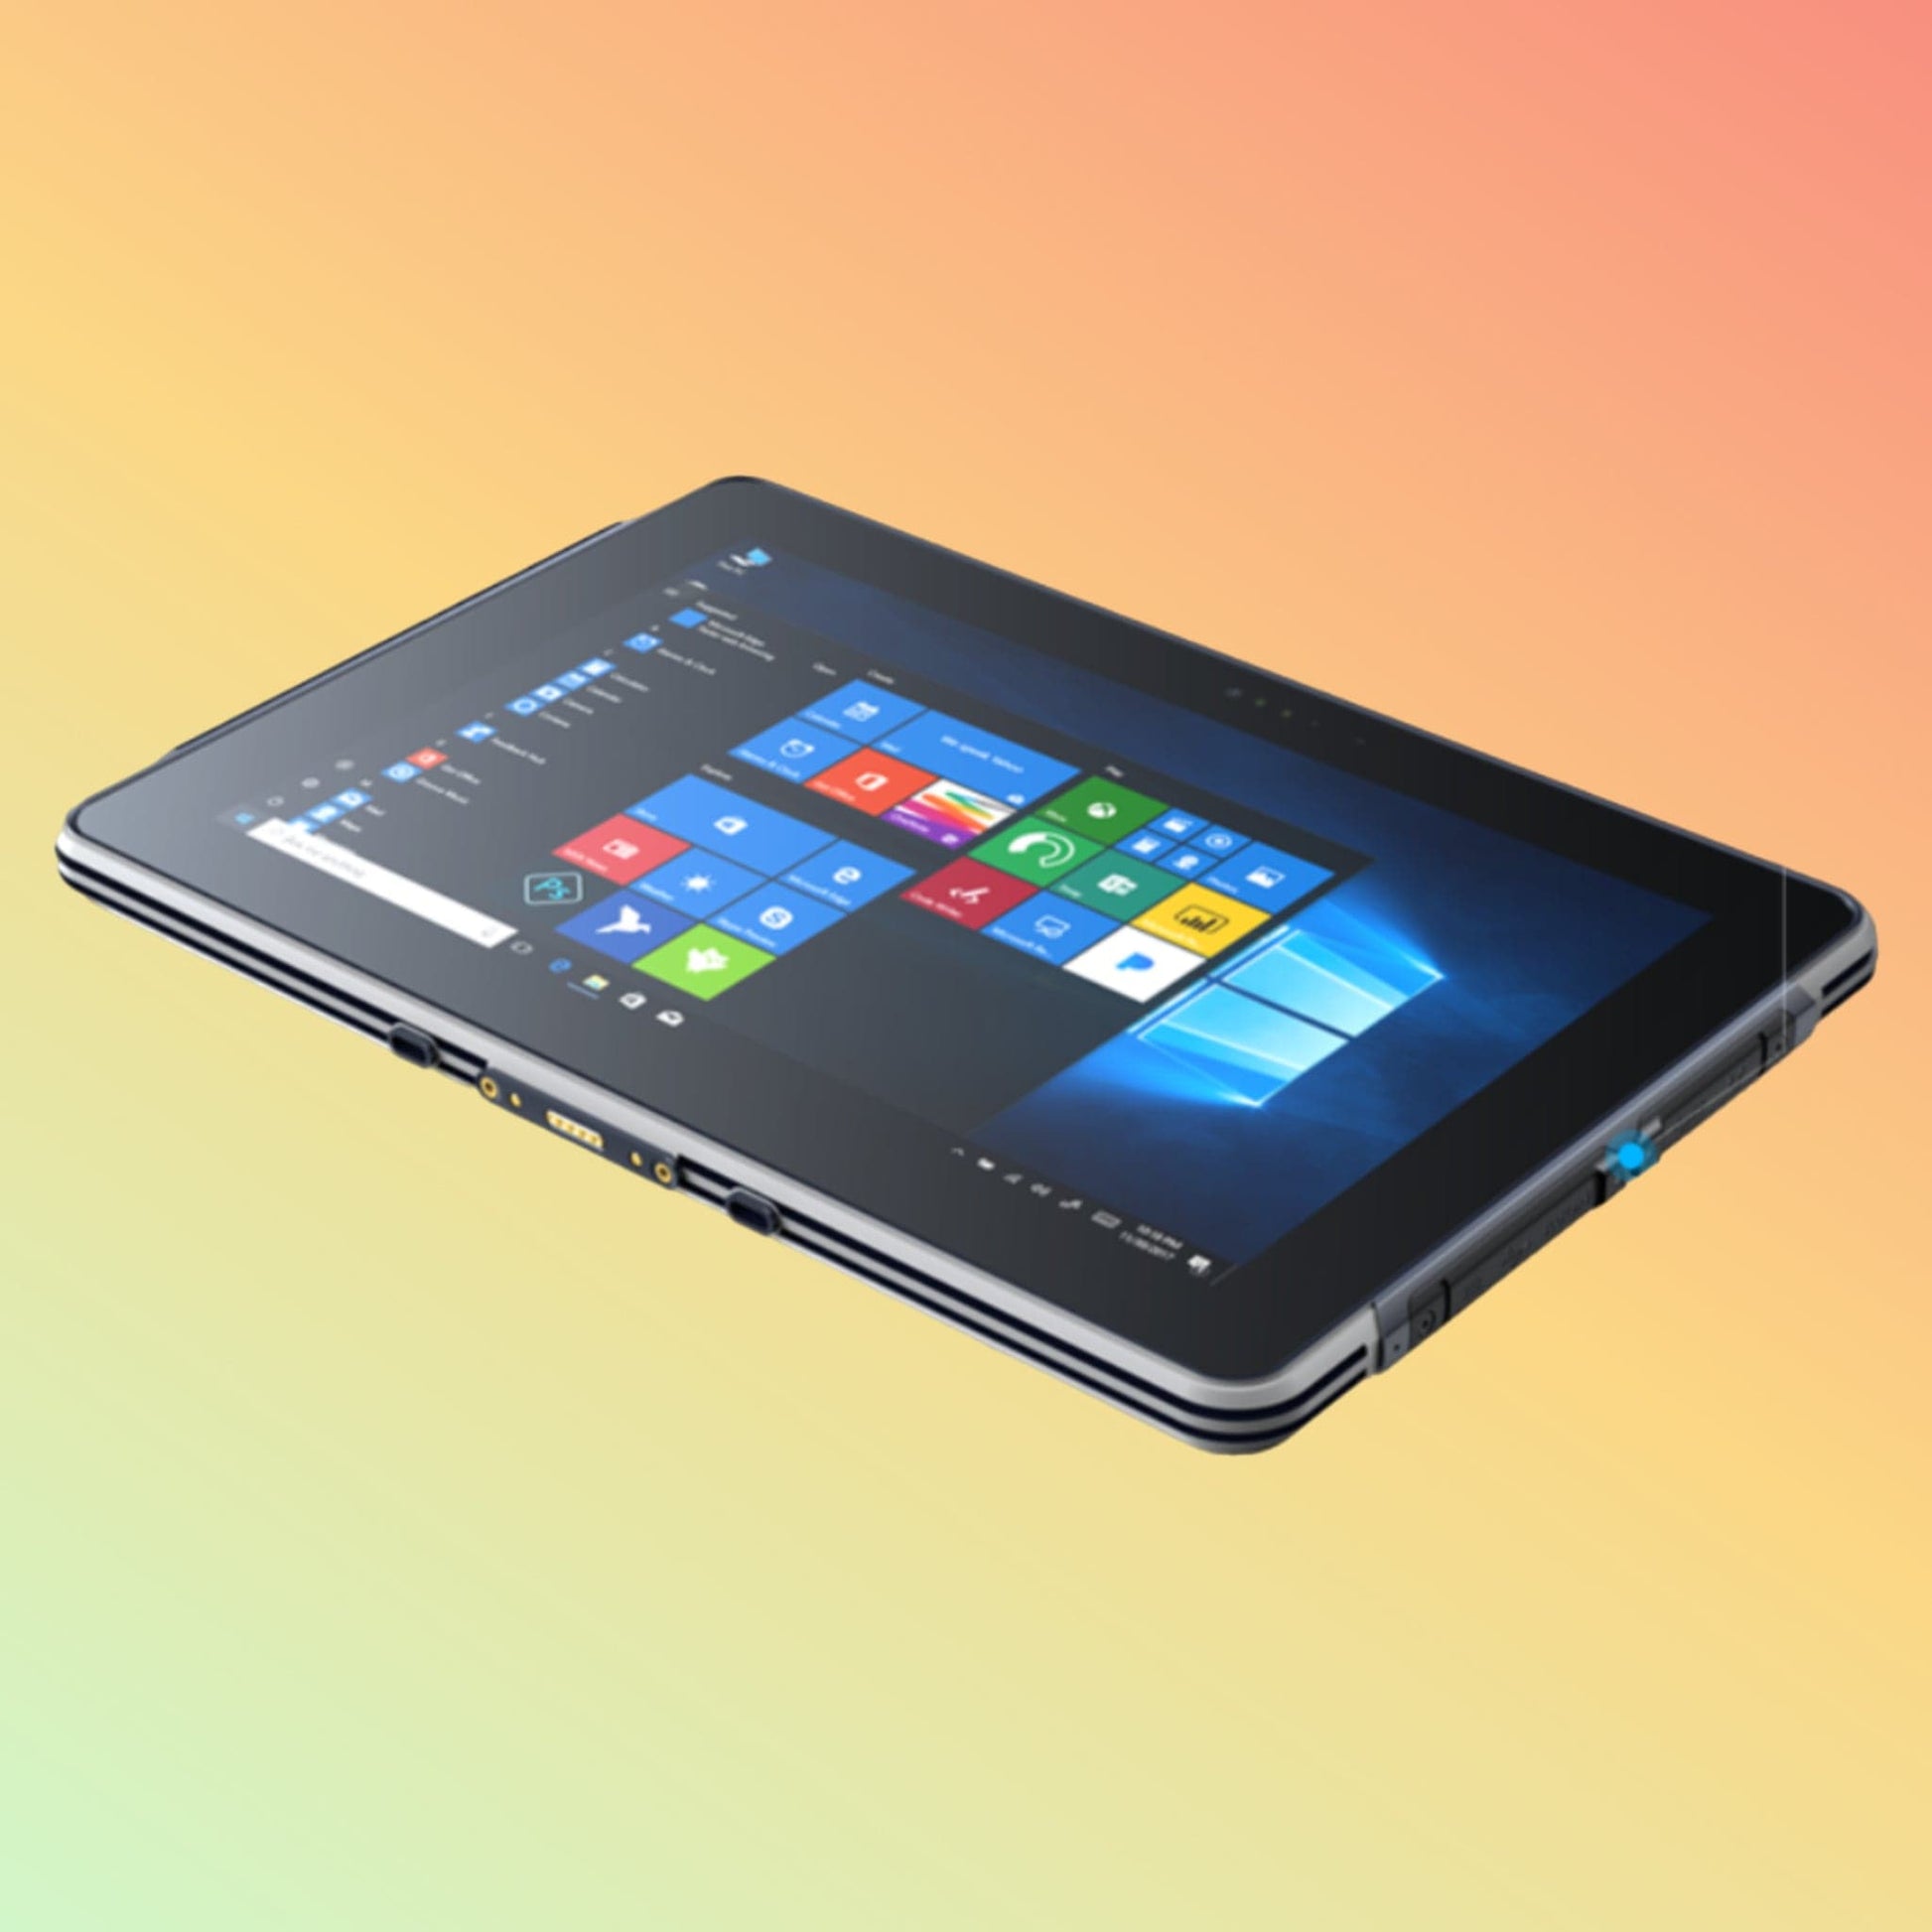 Kuafu UW20 Rugged 10.1 Windows Tablet - Neotech